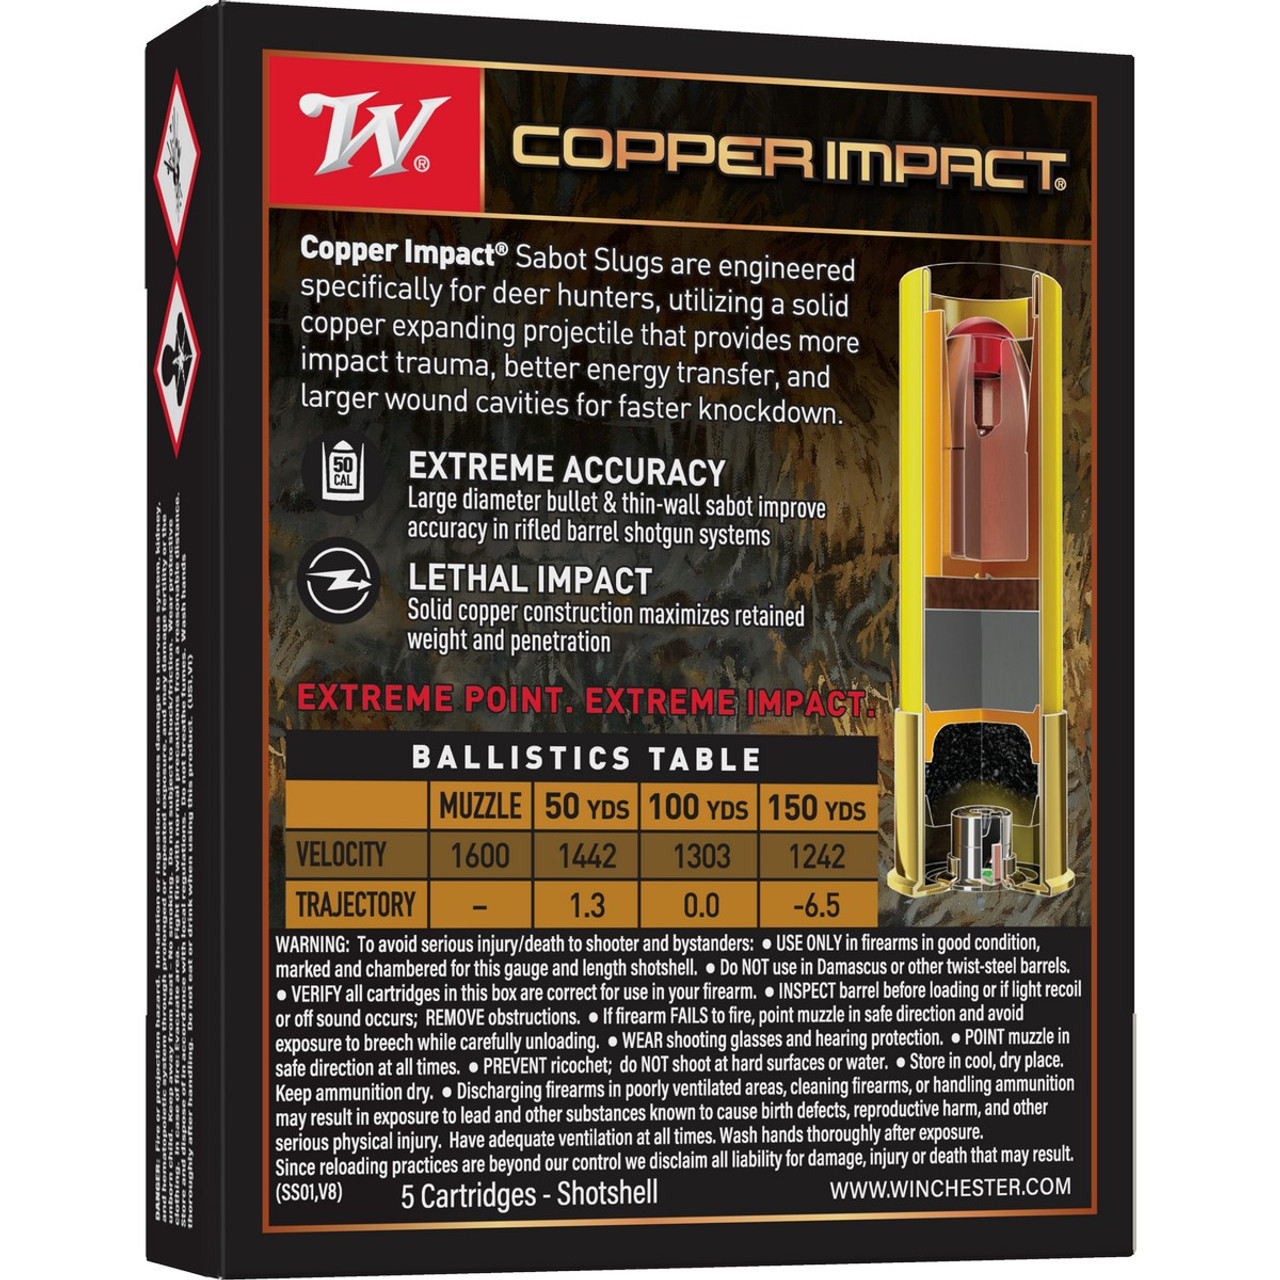 Winchester Copper Impact 20 Gauge 2 3/4" Sabot Slug 5rds